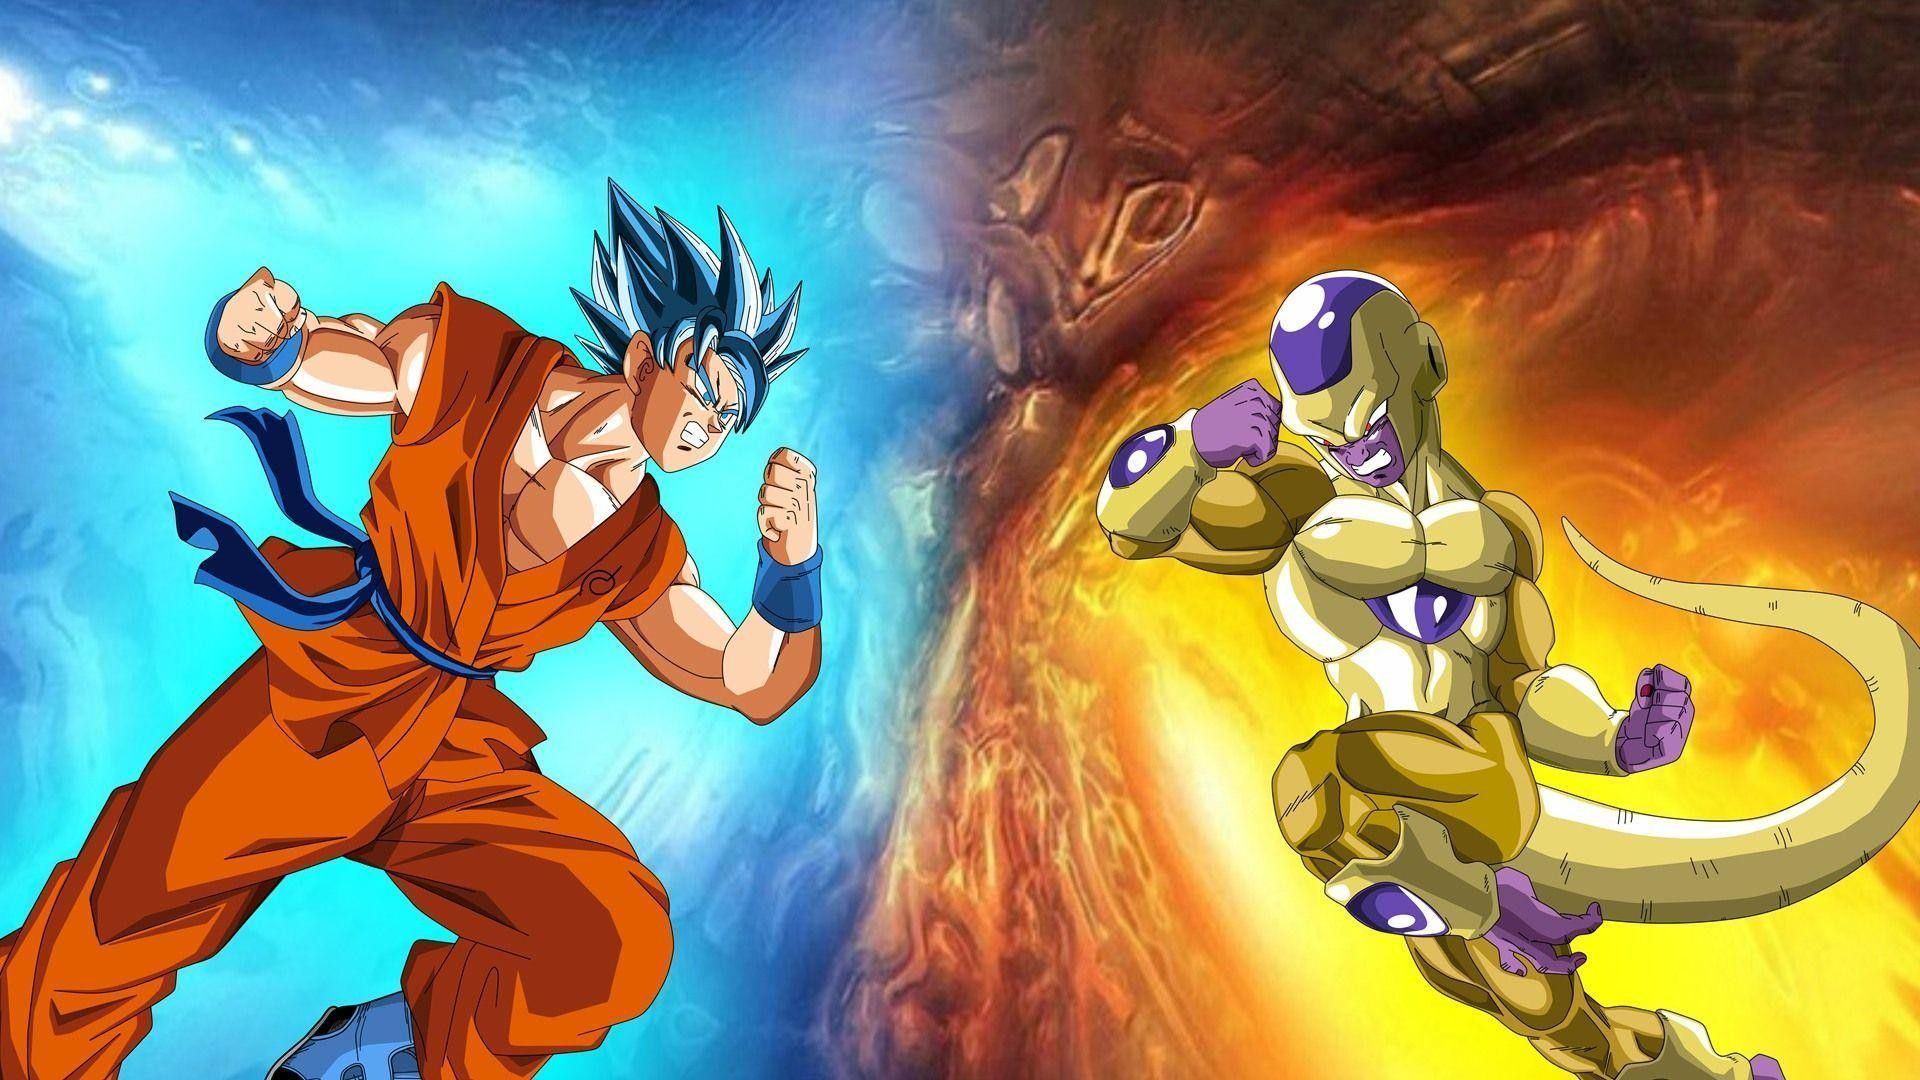 7. Goku Blue Hair vs Frieza - wide 9